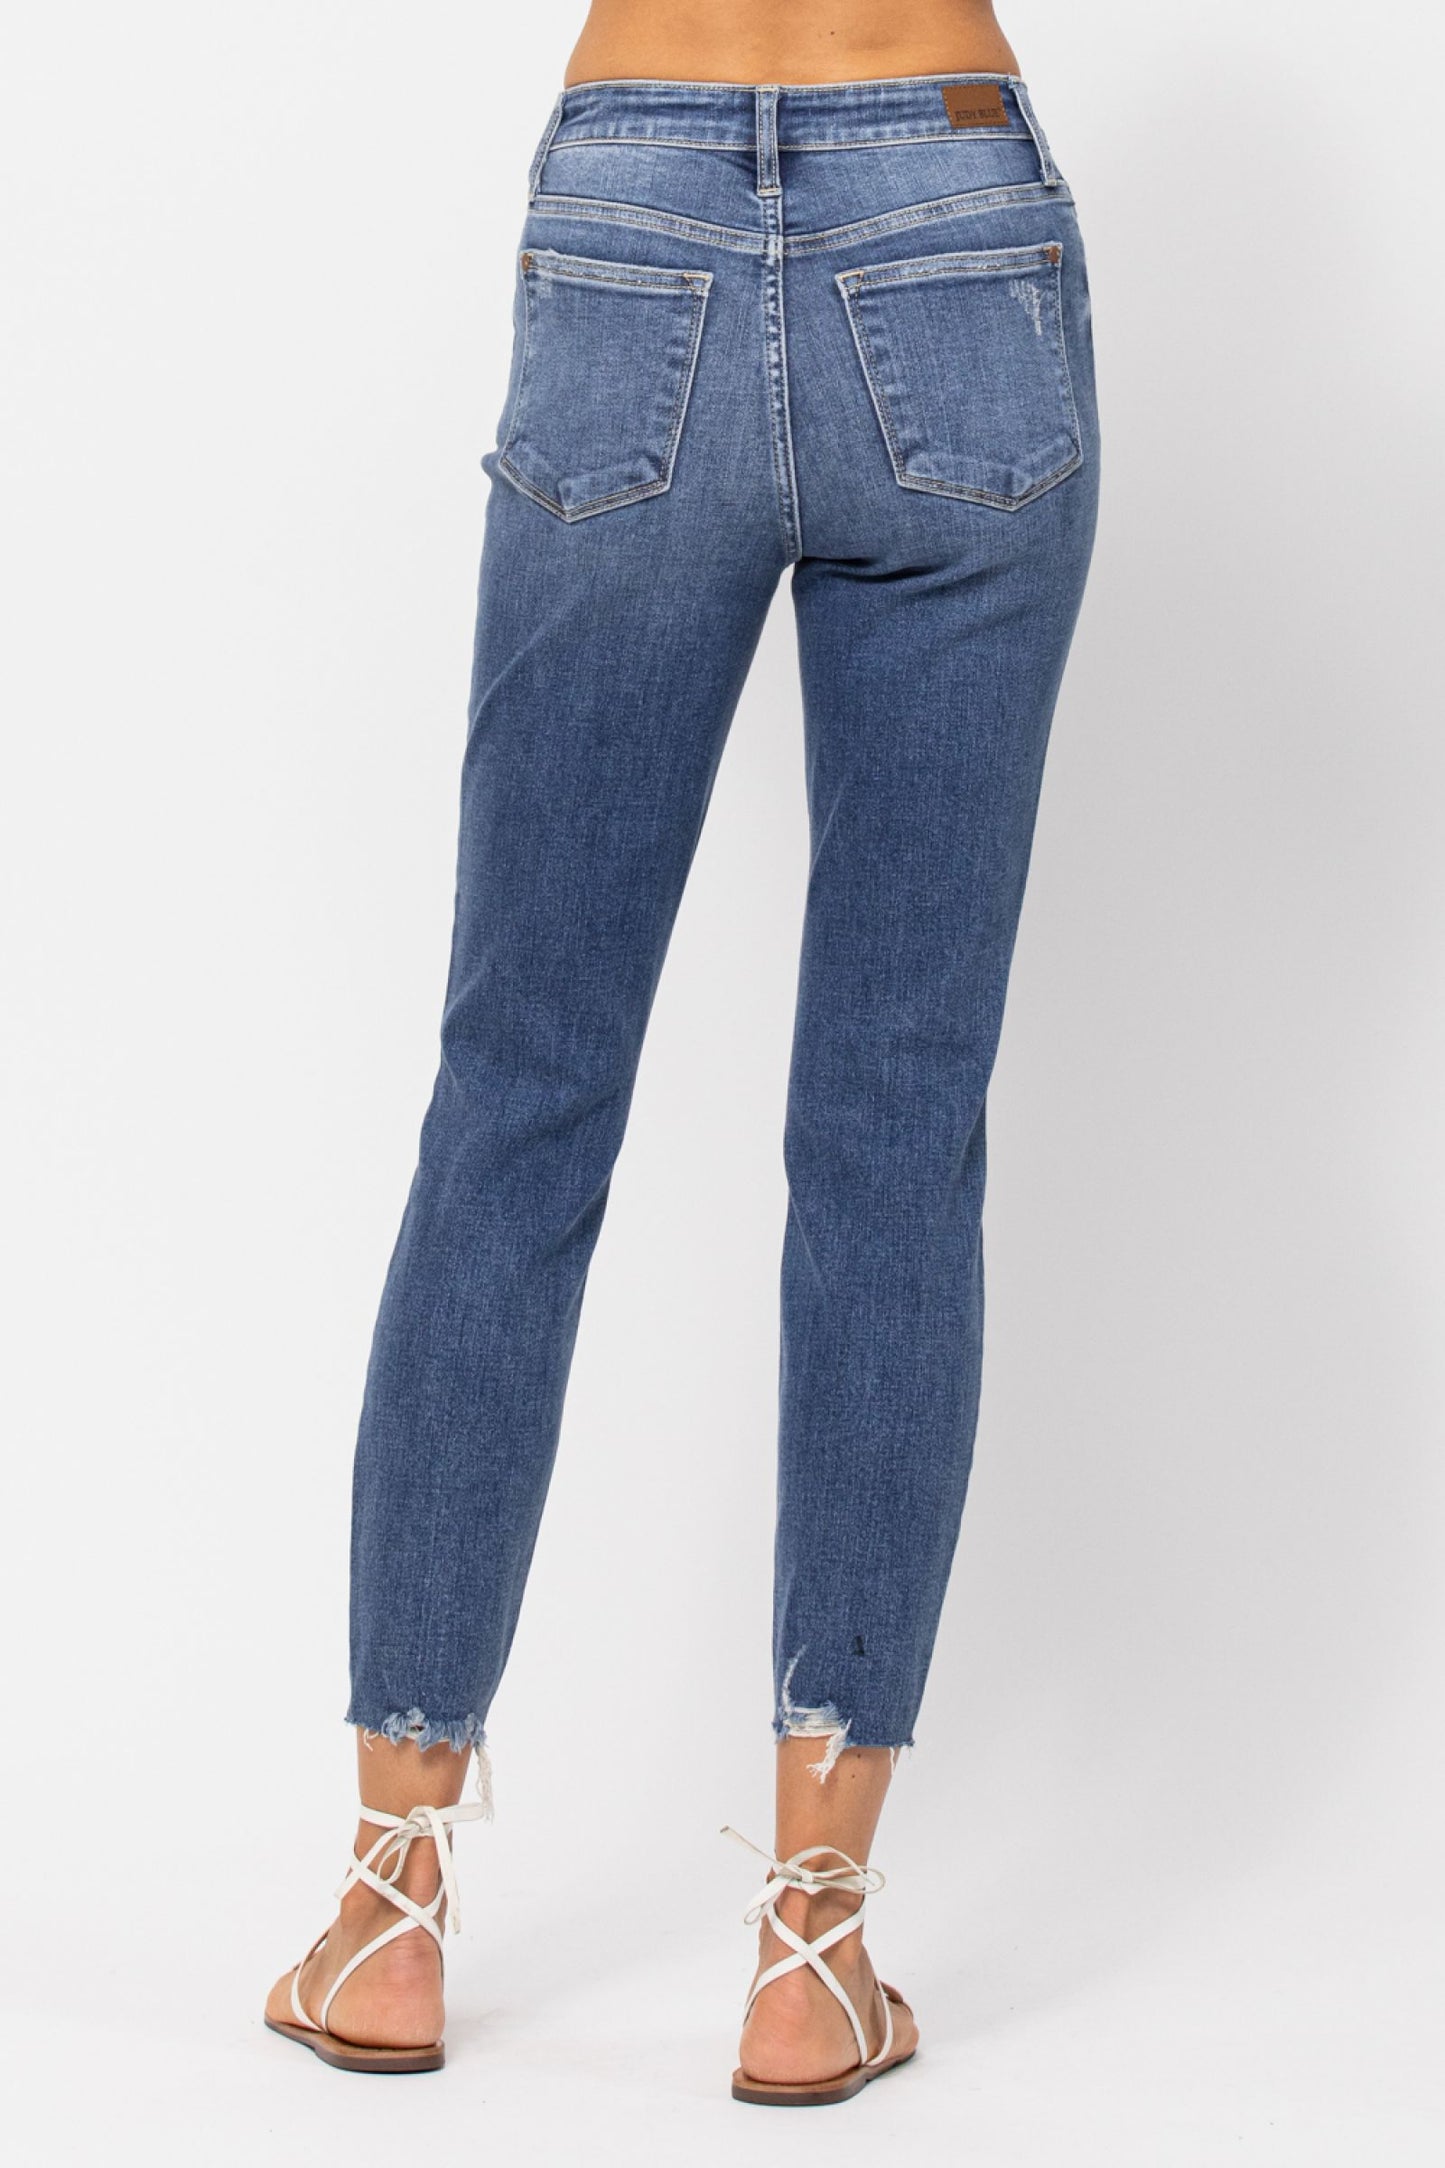 Judy Blue Jesse High-Rise Skinny Jeans (JB 82306)